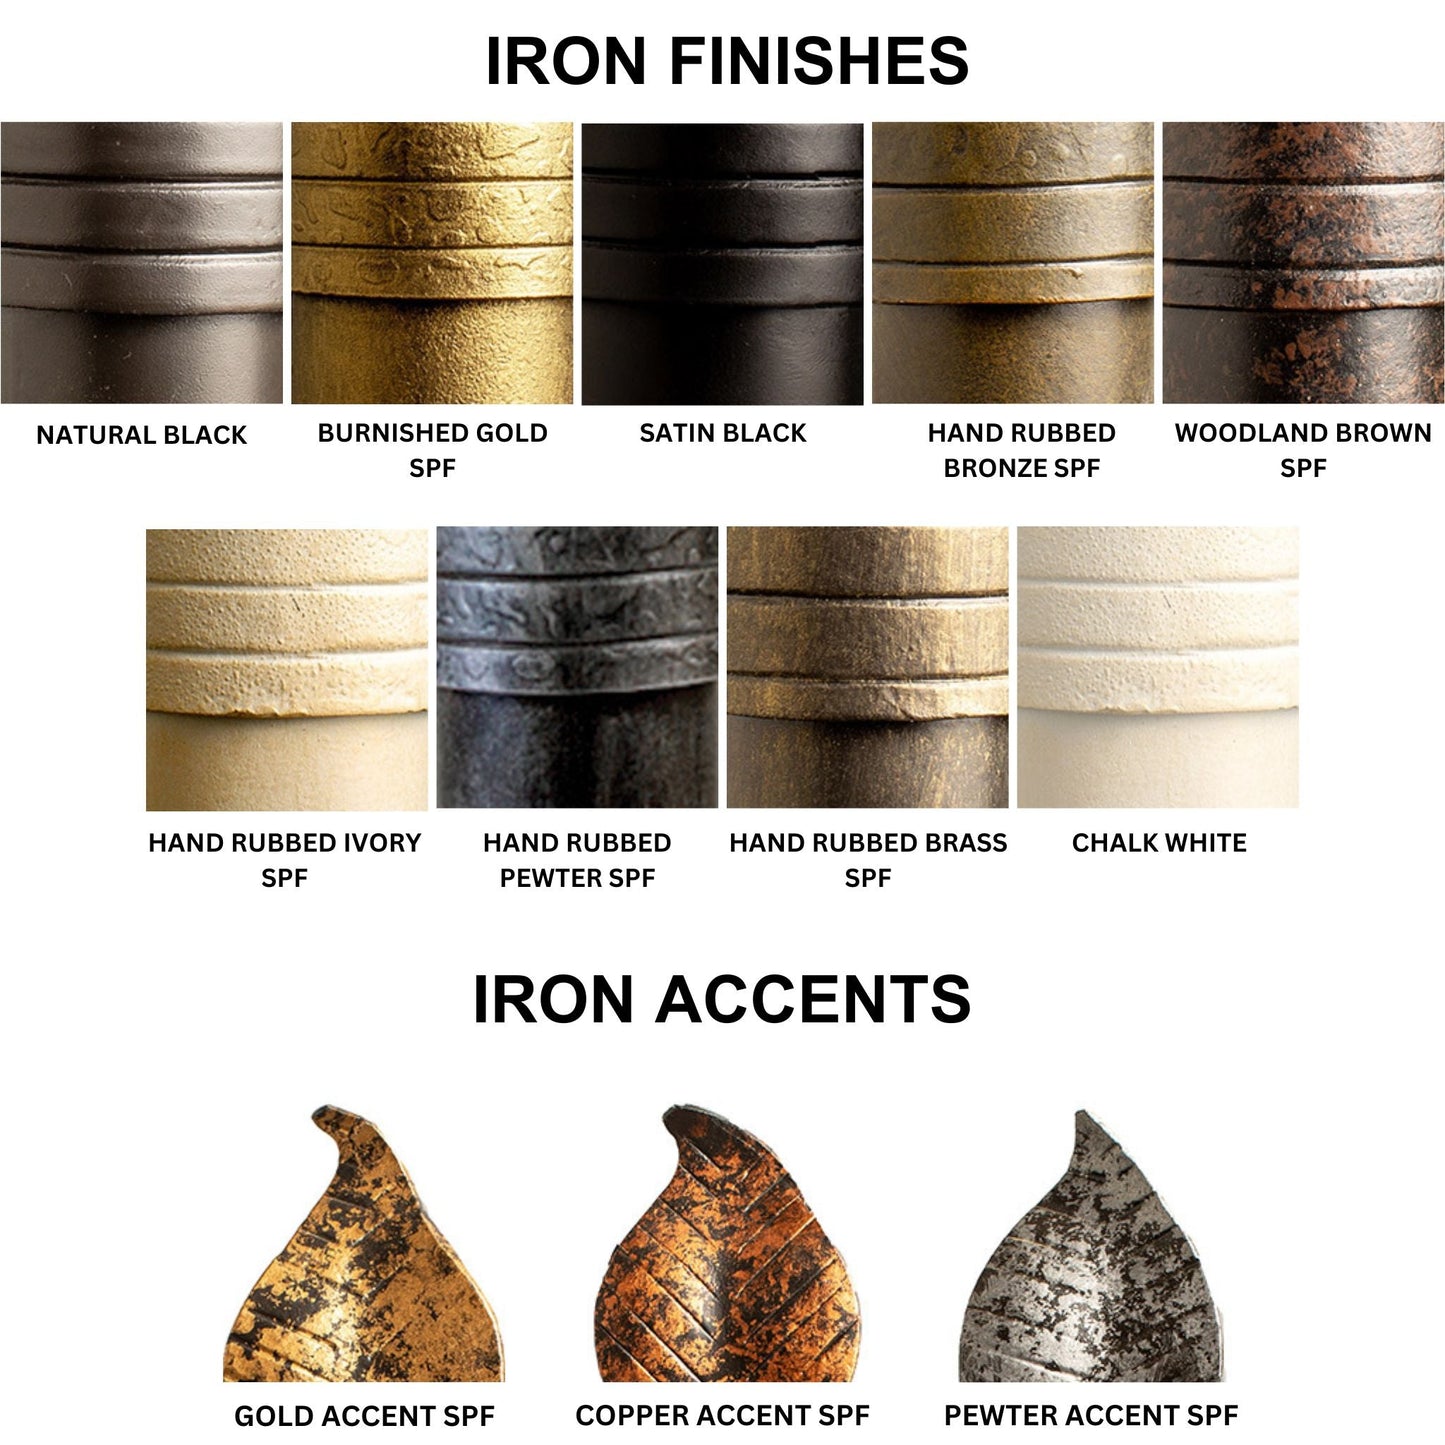 Stone County Ironworks Knot 16" Natural Black Iron Towel Bar